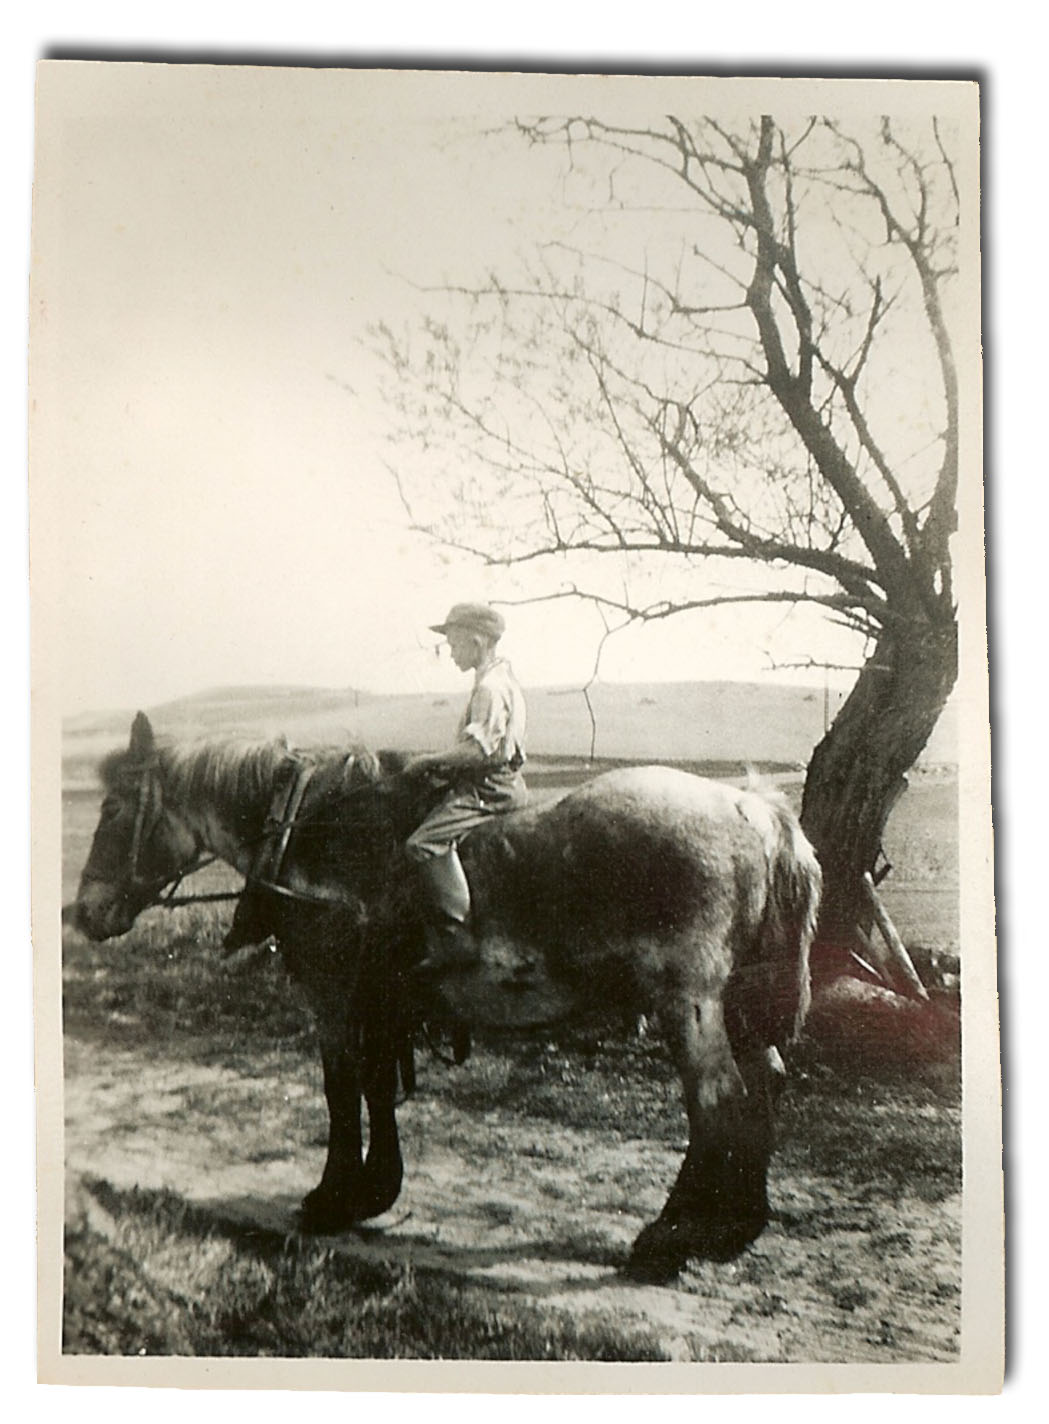 Today's owner of Källagården, Jörgen, on the horse Skimlan.